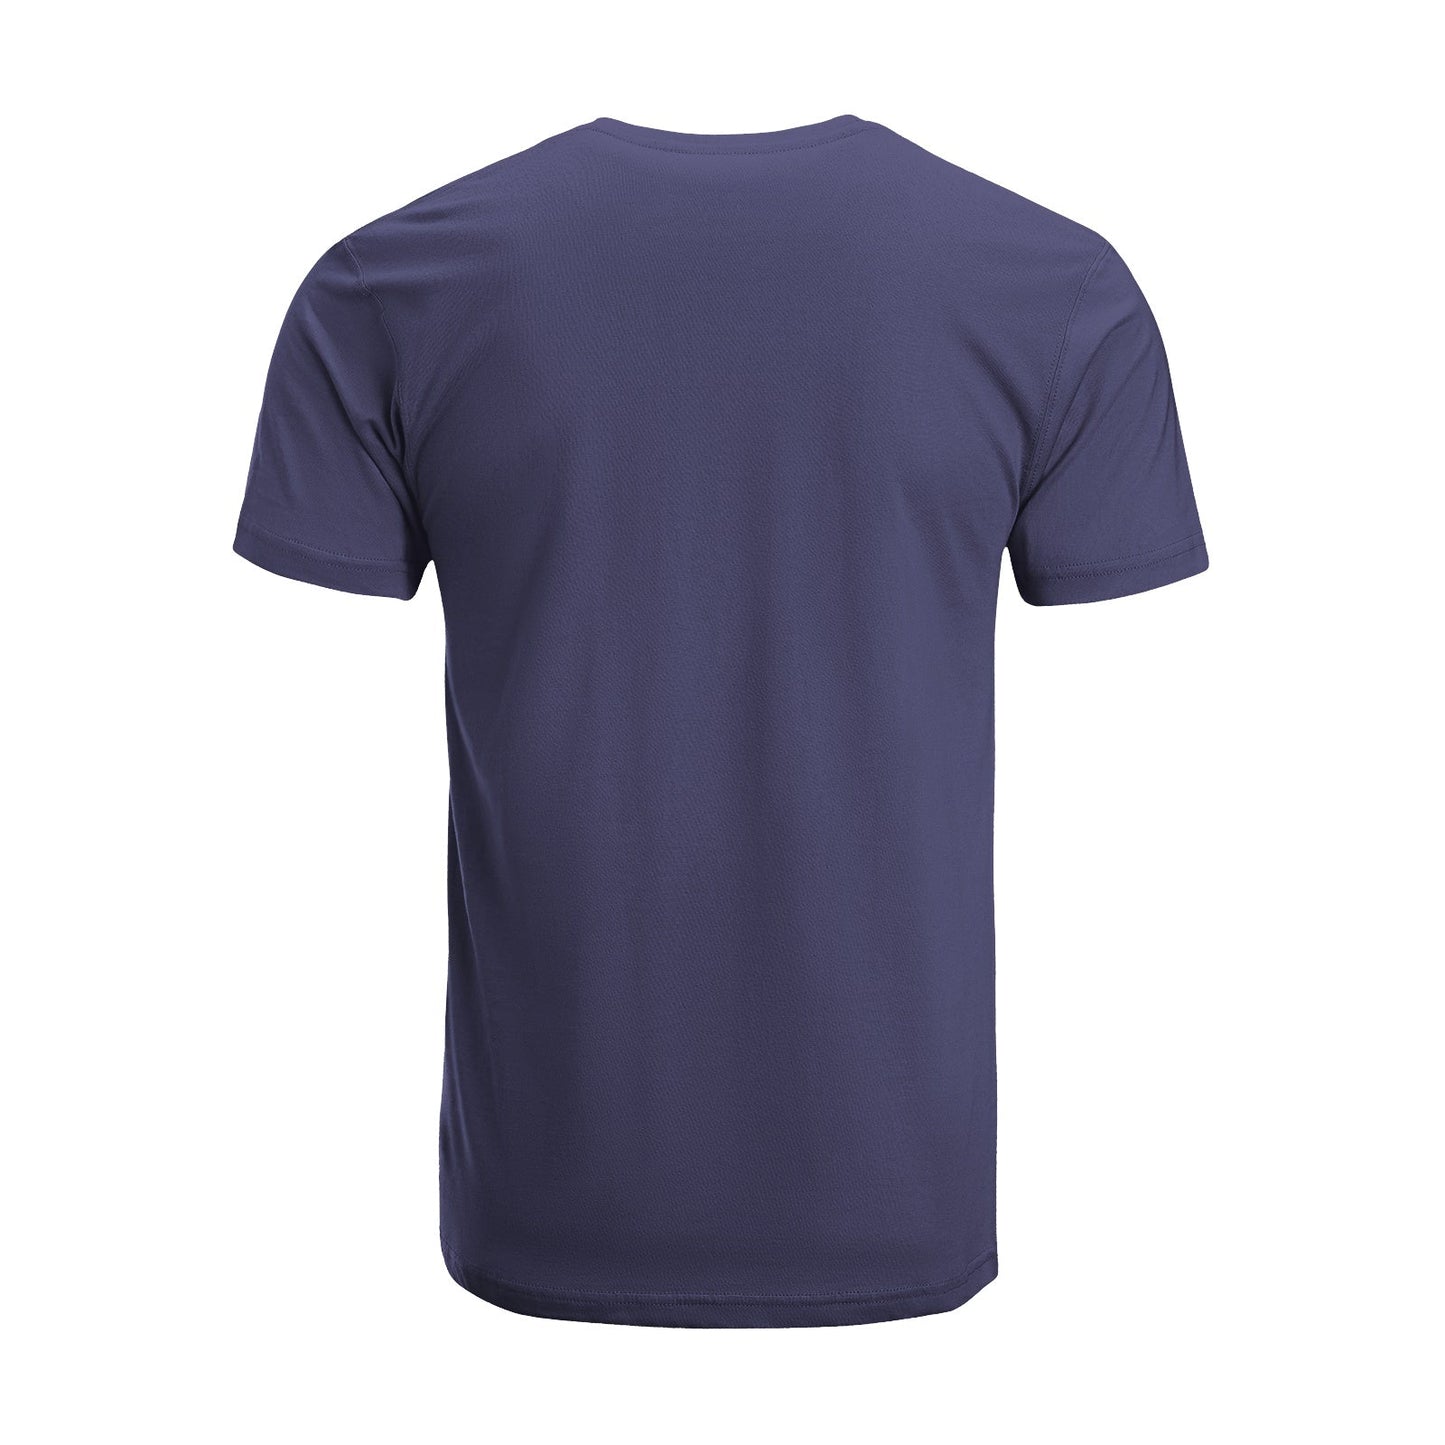 Unisex Short Sleeve Crew Neck Cotton Jersey T-Shirt CAT 41 - Tara-Outfits.com